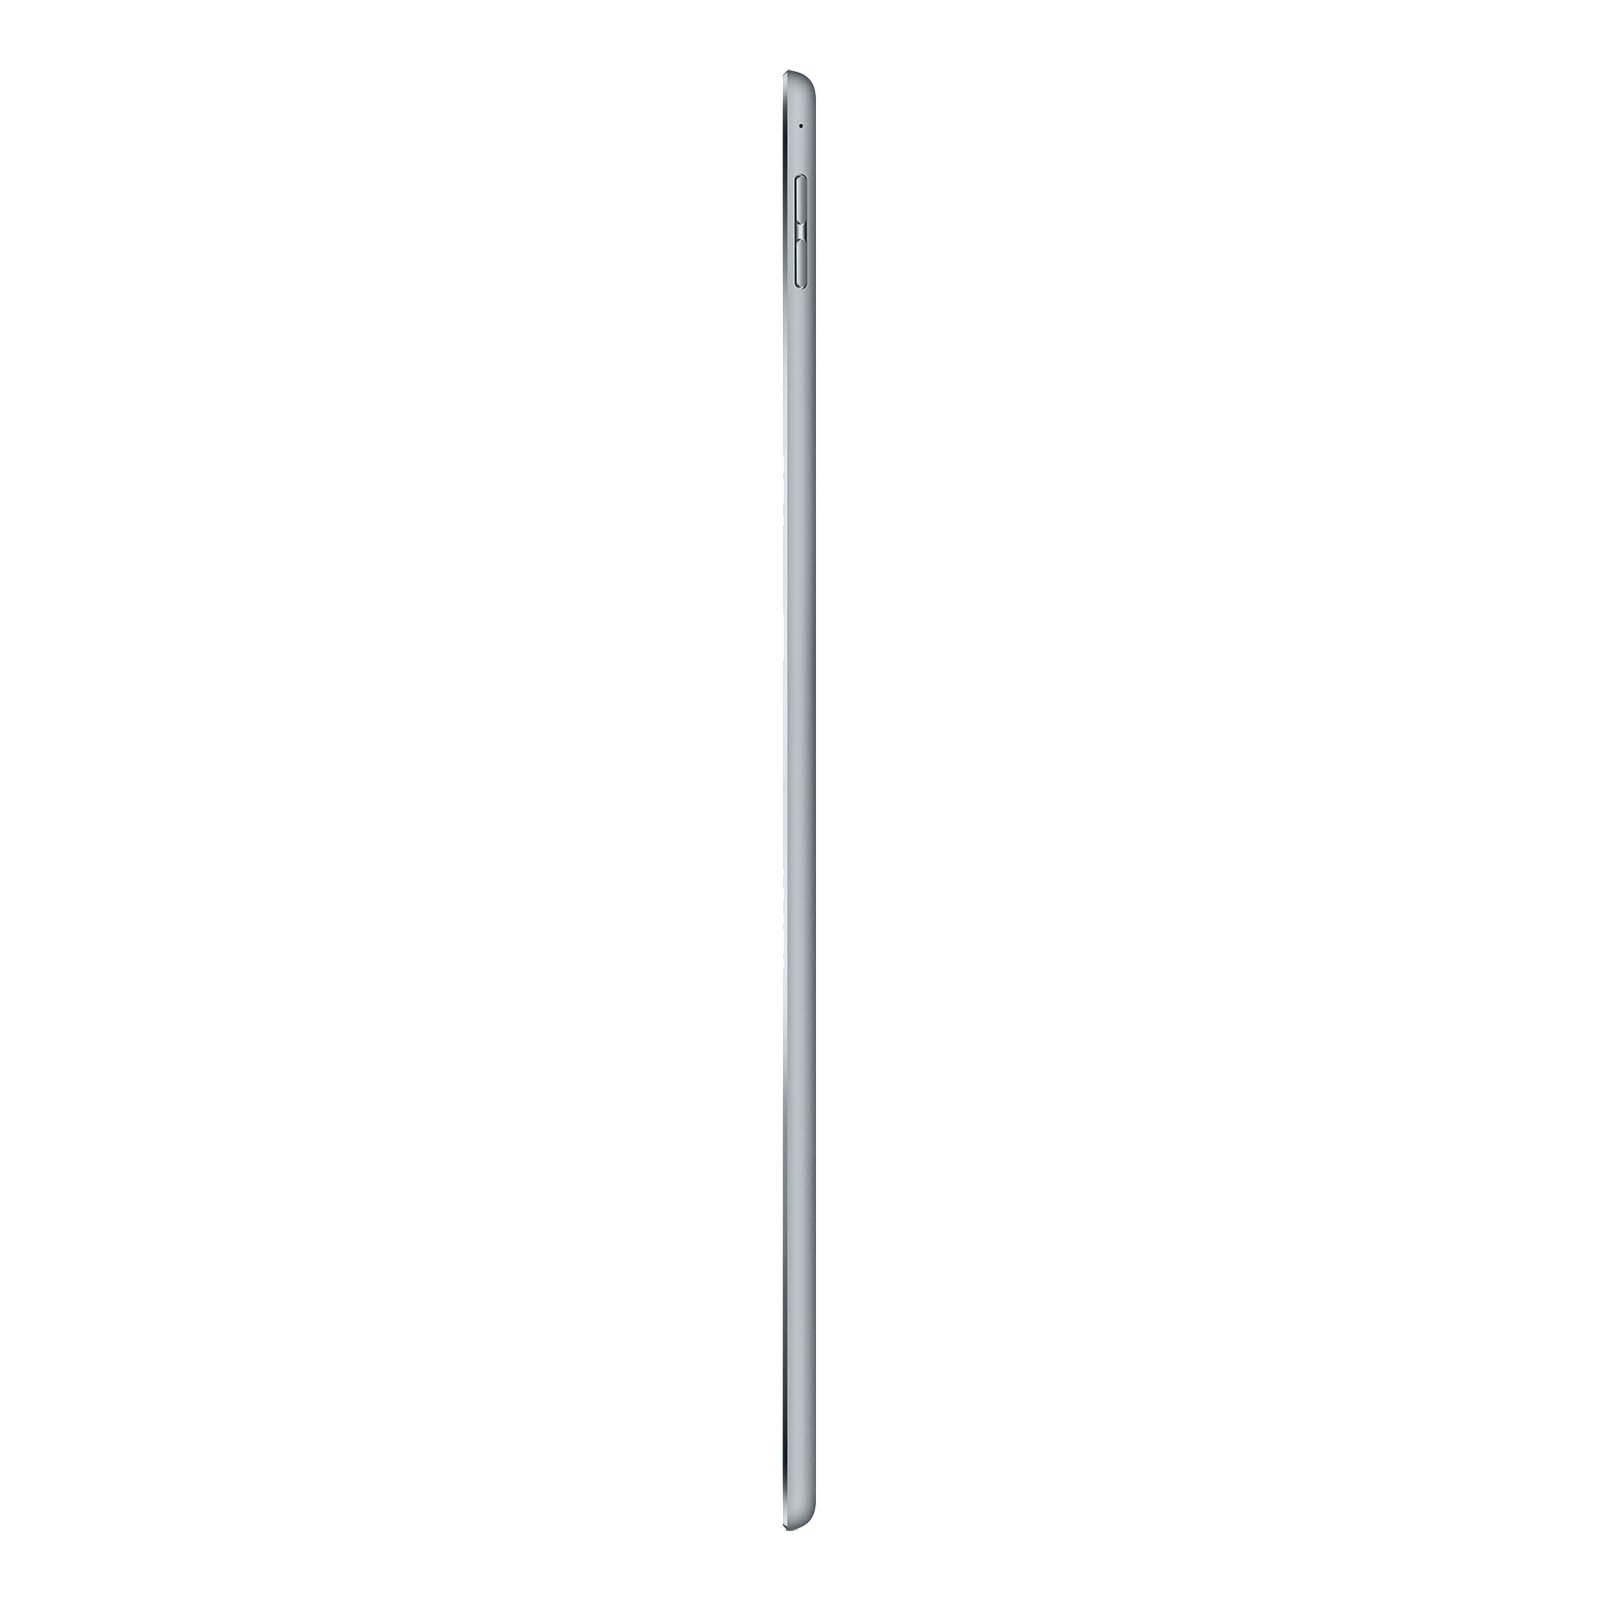 iPad Pro 12.9 Inch 3rd Gen 256GB Space Grey Good - Unlocked